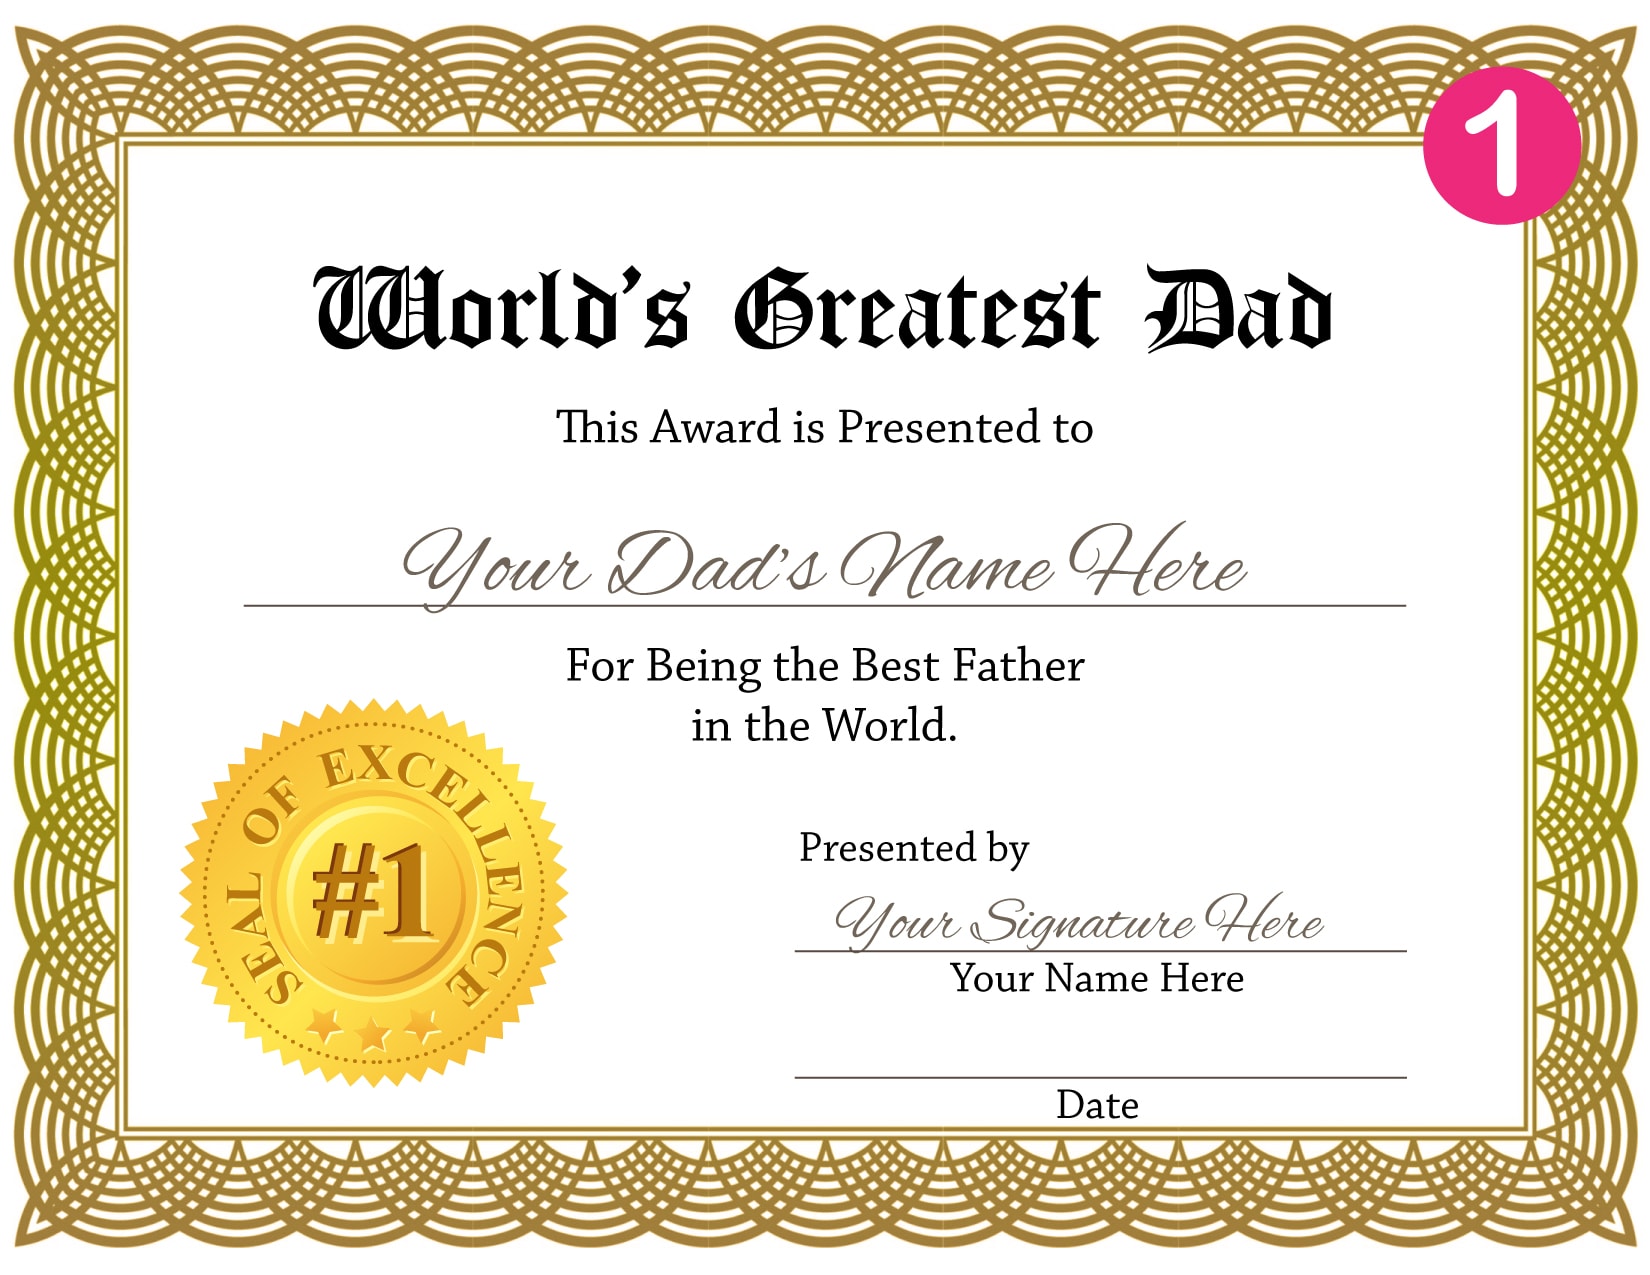 Fathers Day Certificate Template ubicaciondepersonas cdmx gob mx